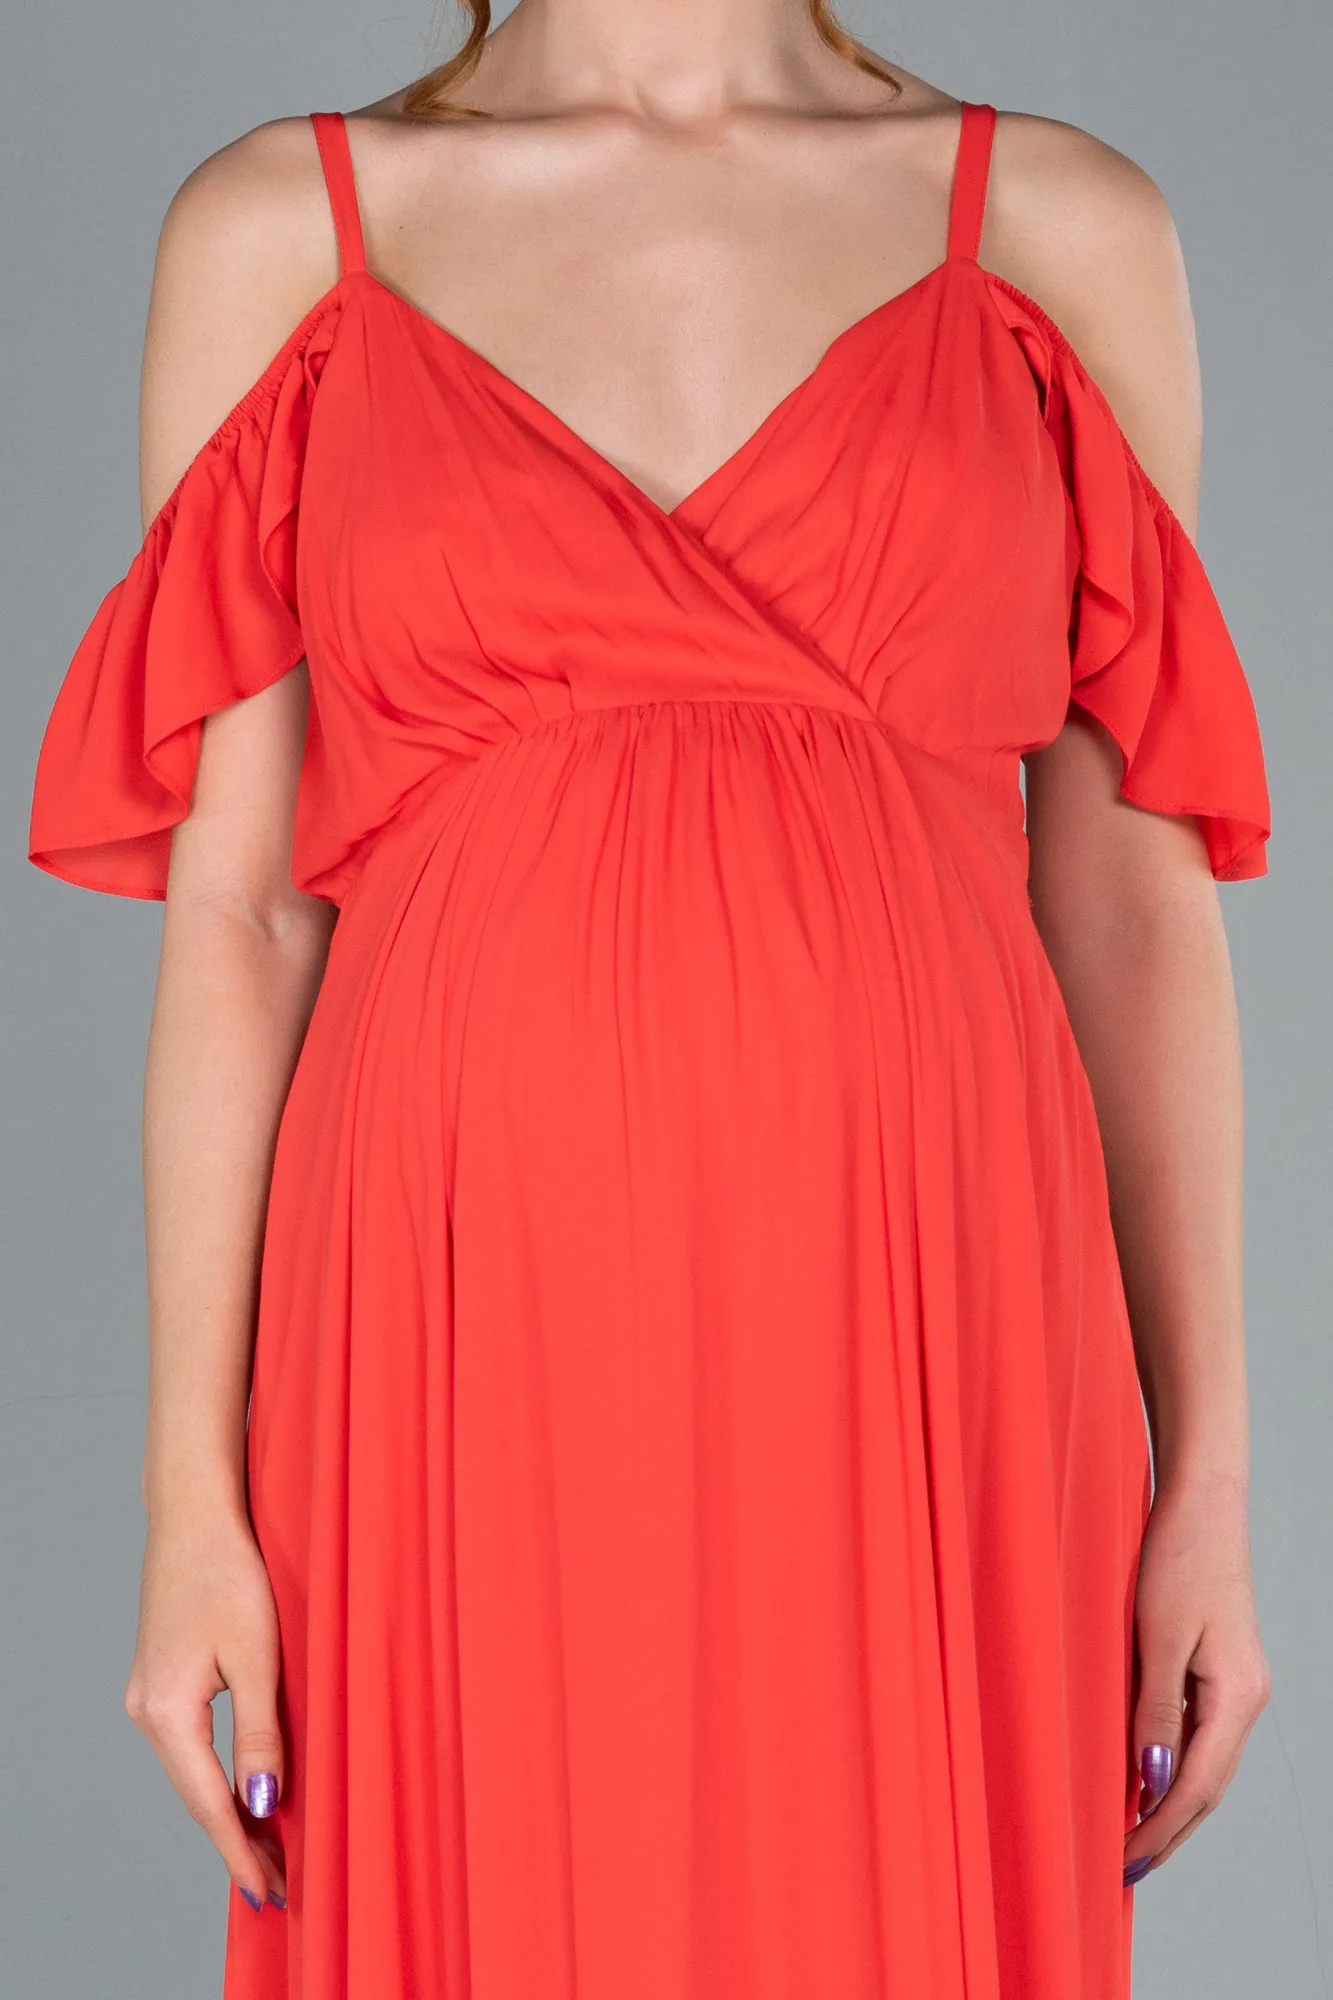 Pomegranate Flower-Long Pregnancy Evening Dress ABU756